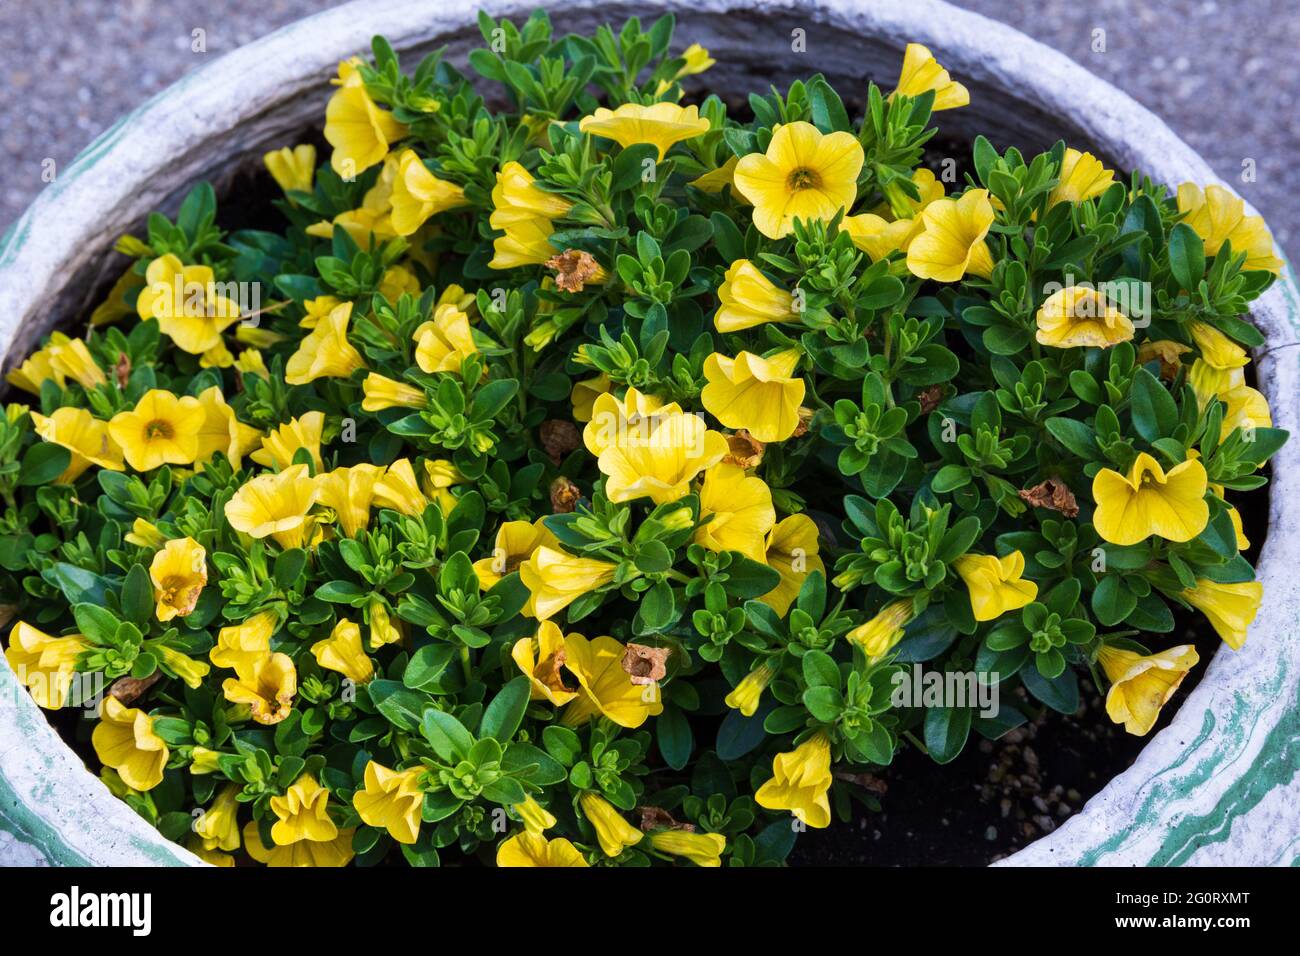 a flower pot full of yellow million bells flowers Stock Photo